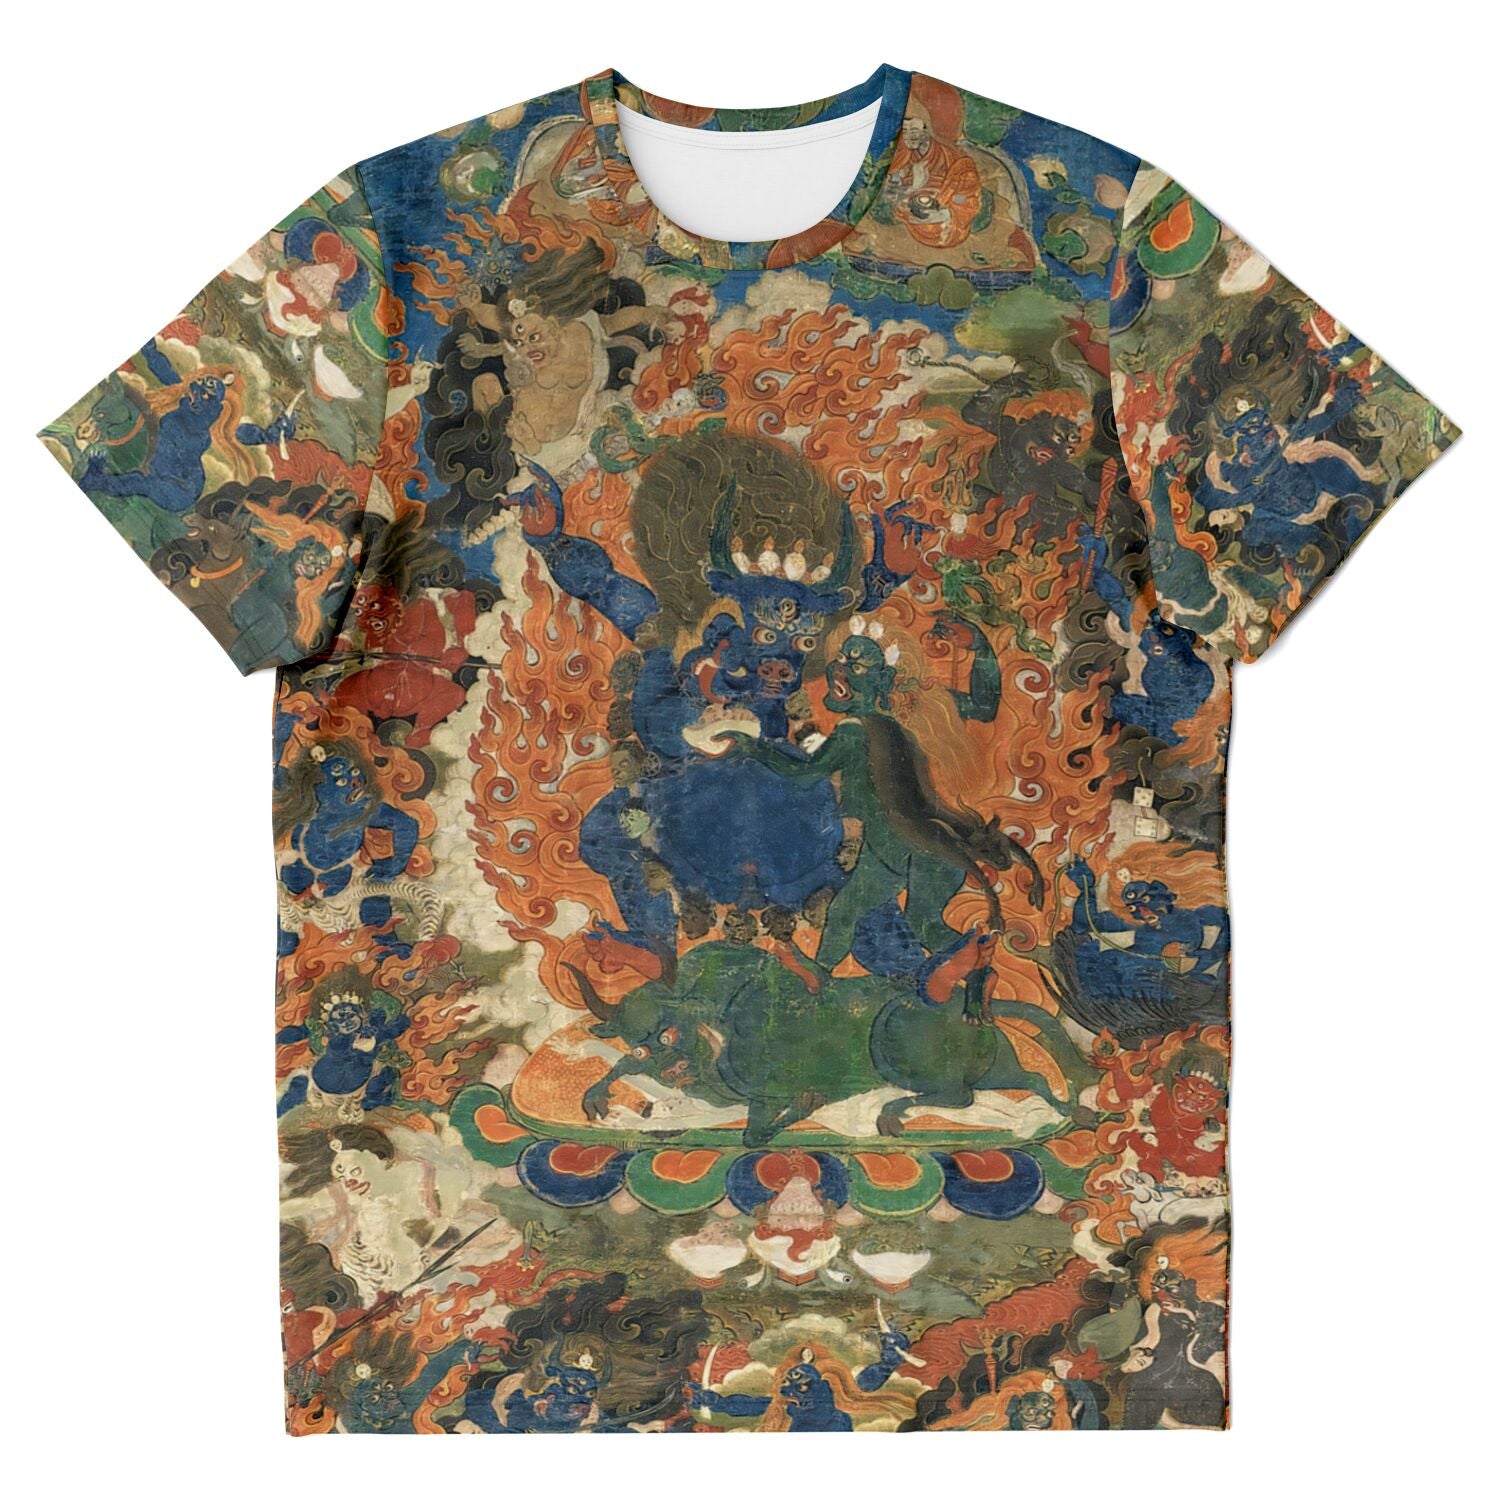 T-shirt XS Yama Dharmaraja Wrathful Deity | Antique-Aged Tibetan Spiritual Thangka, Alidhasana Meditation Deity Graphic Art T-Shirt